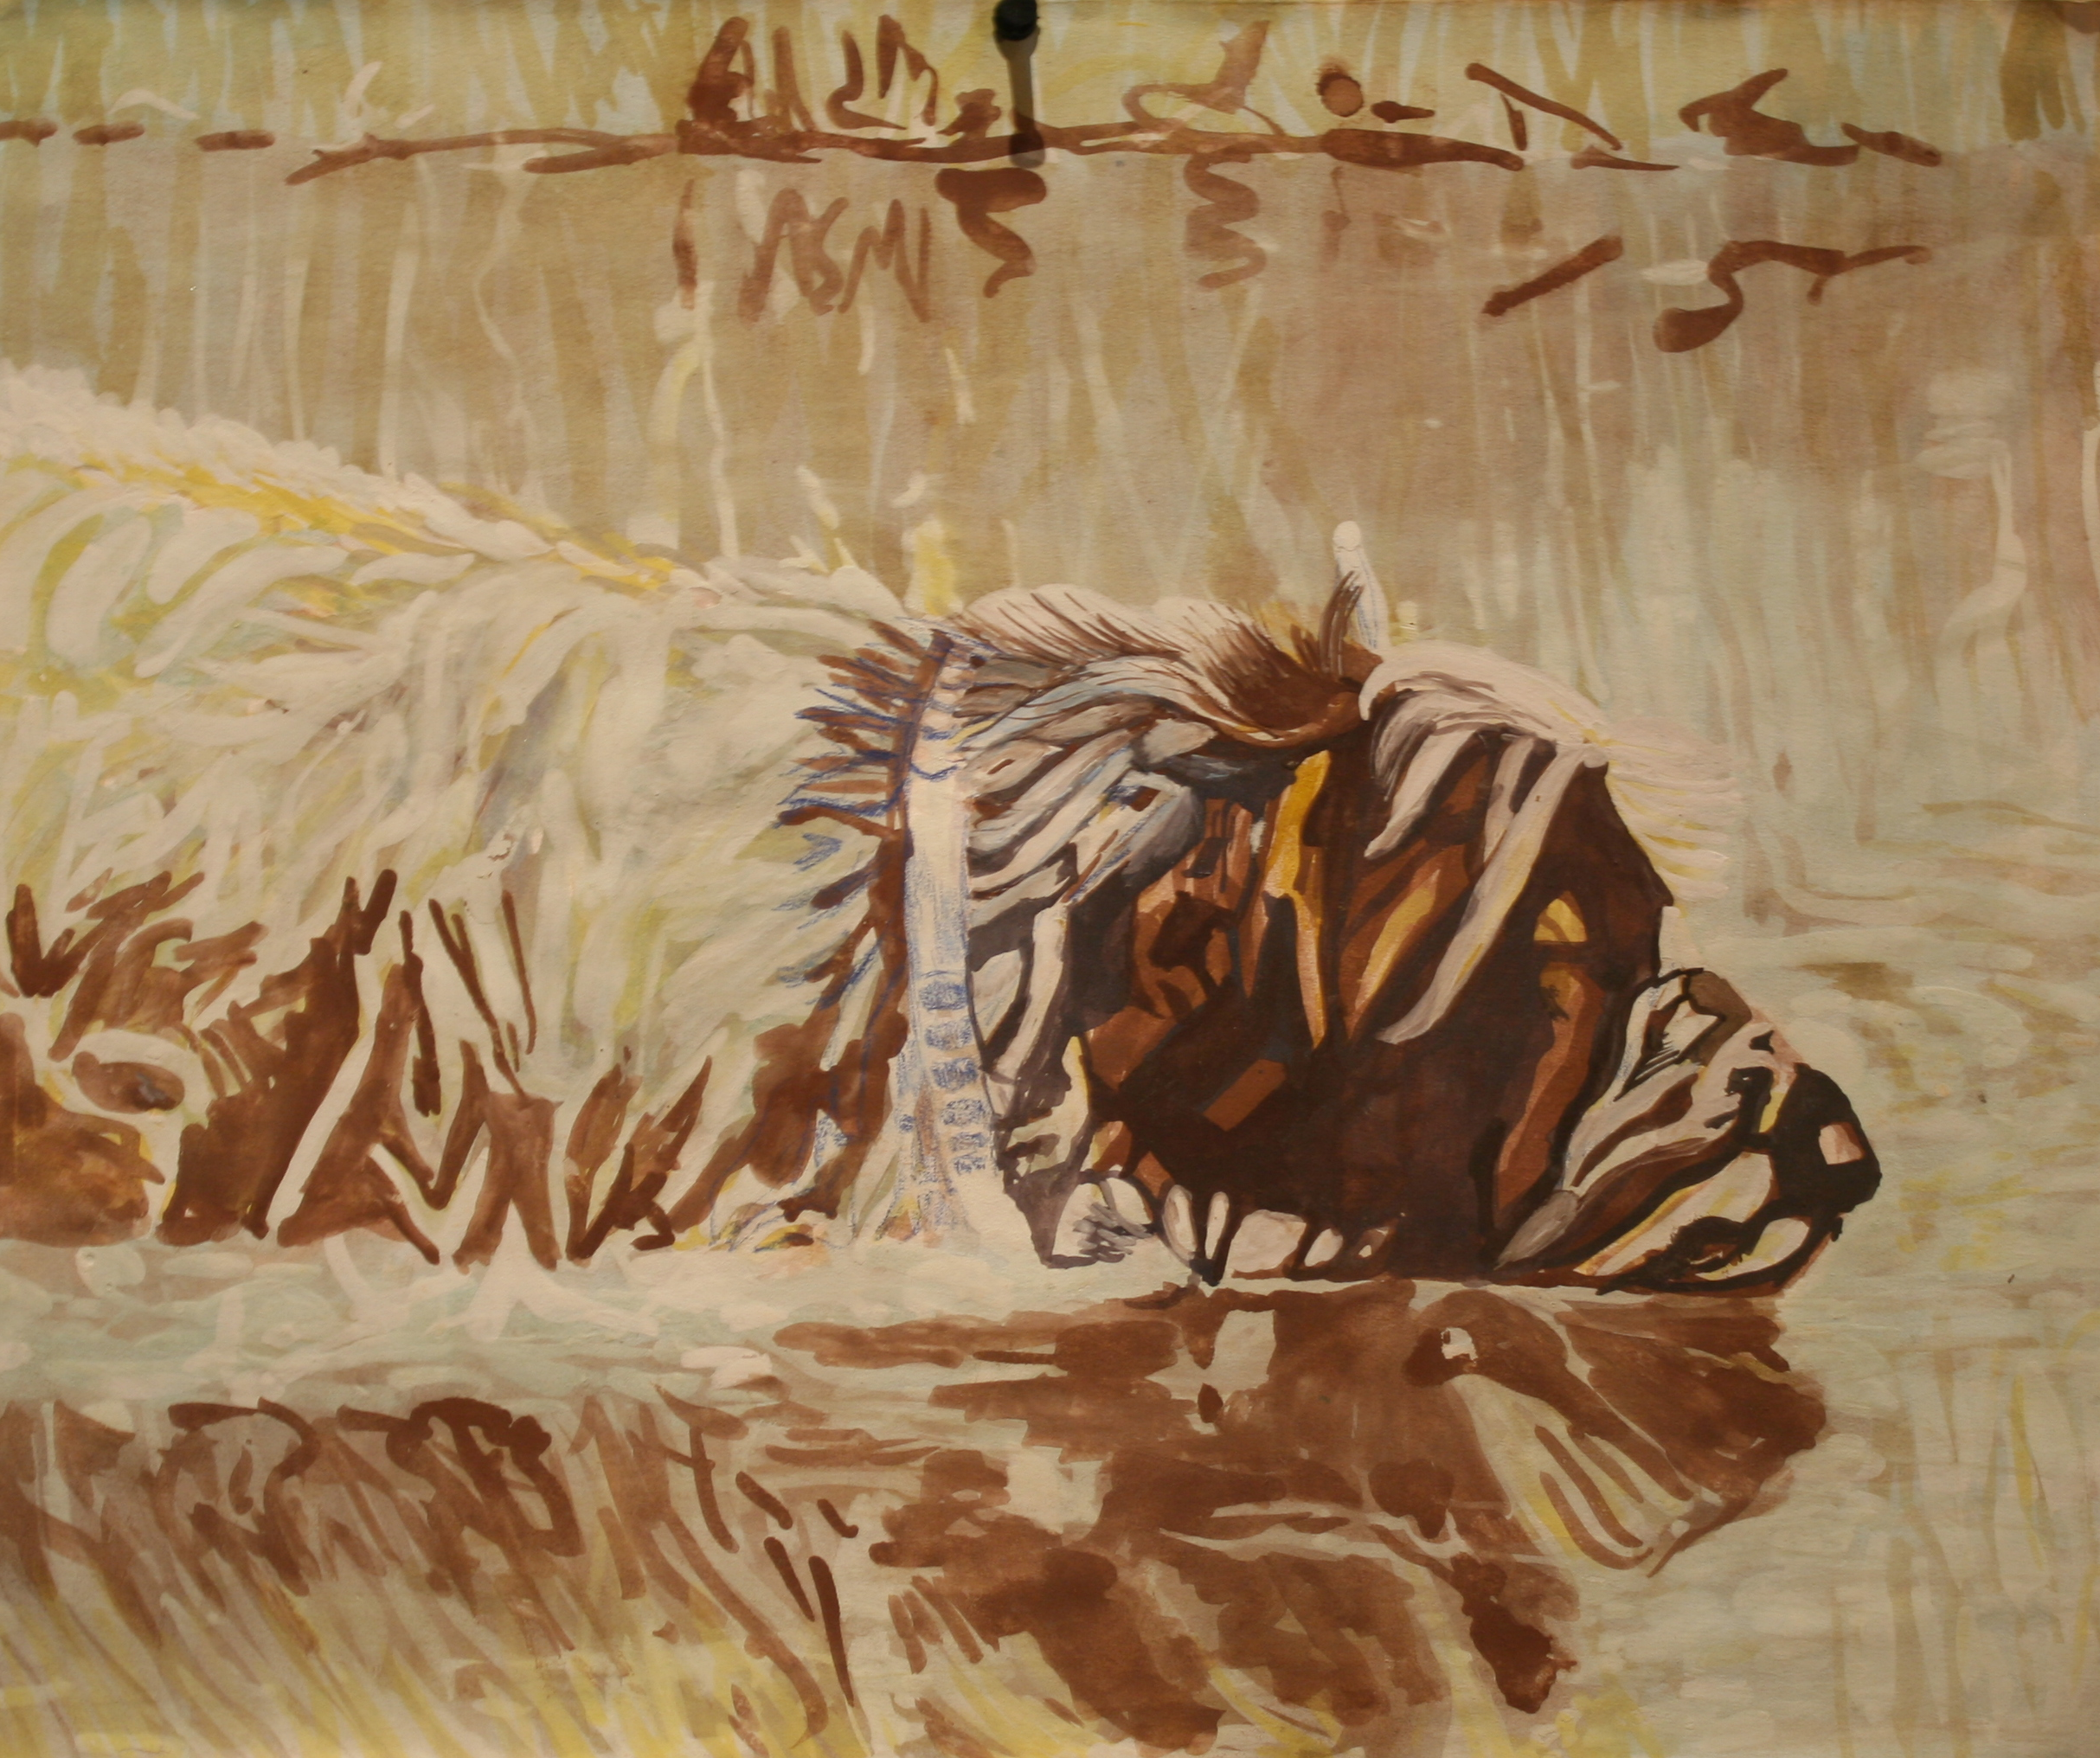 animals-from-canadian-and-cork-ireland-artist---art-van-leeuwen